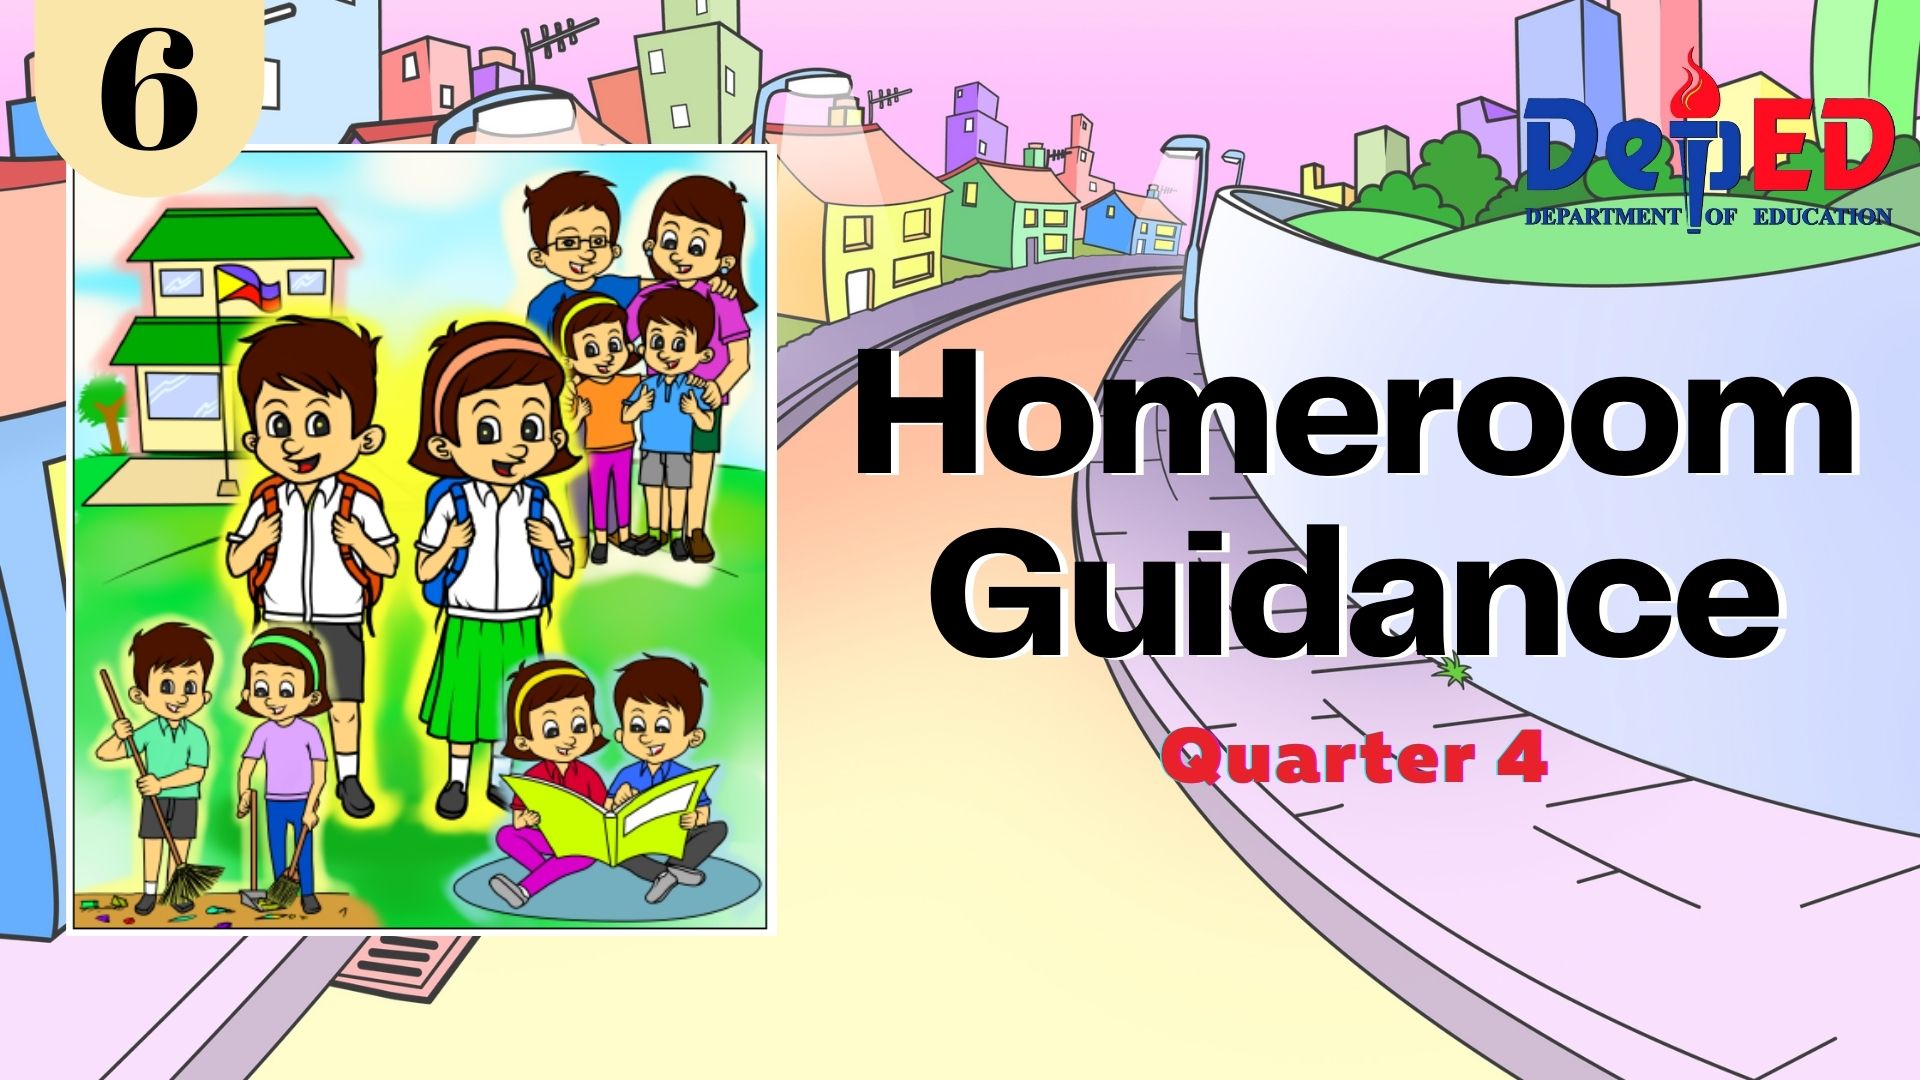 Grade 6 - Homeroom Guidance - SIR ROBLES